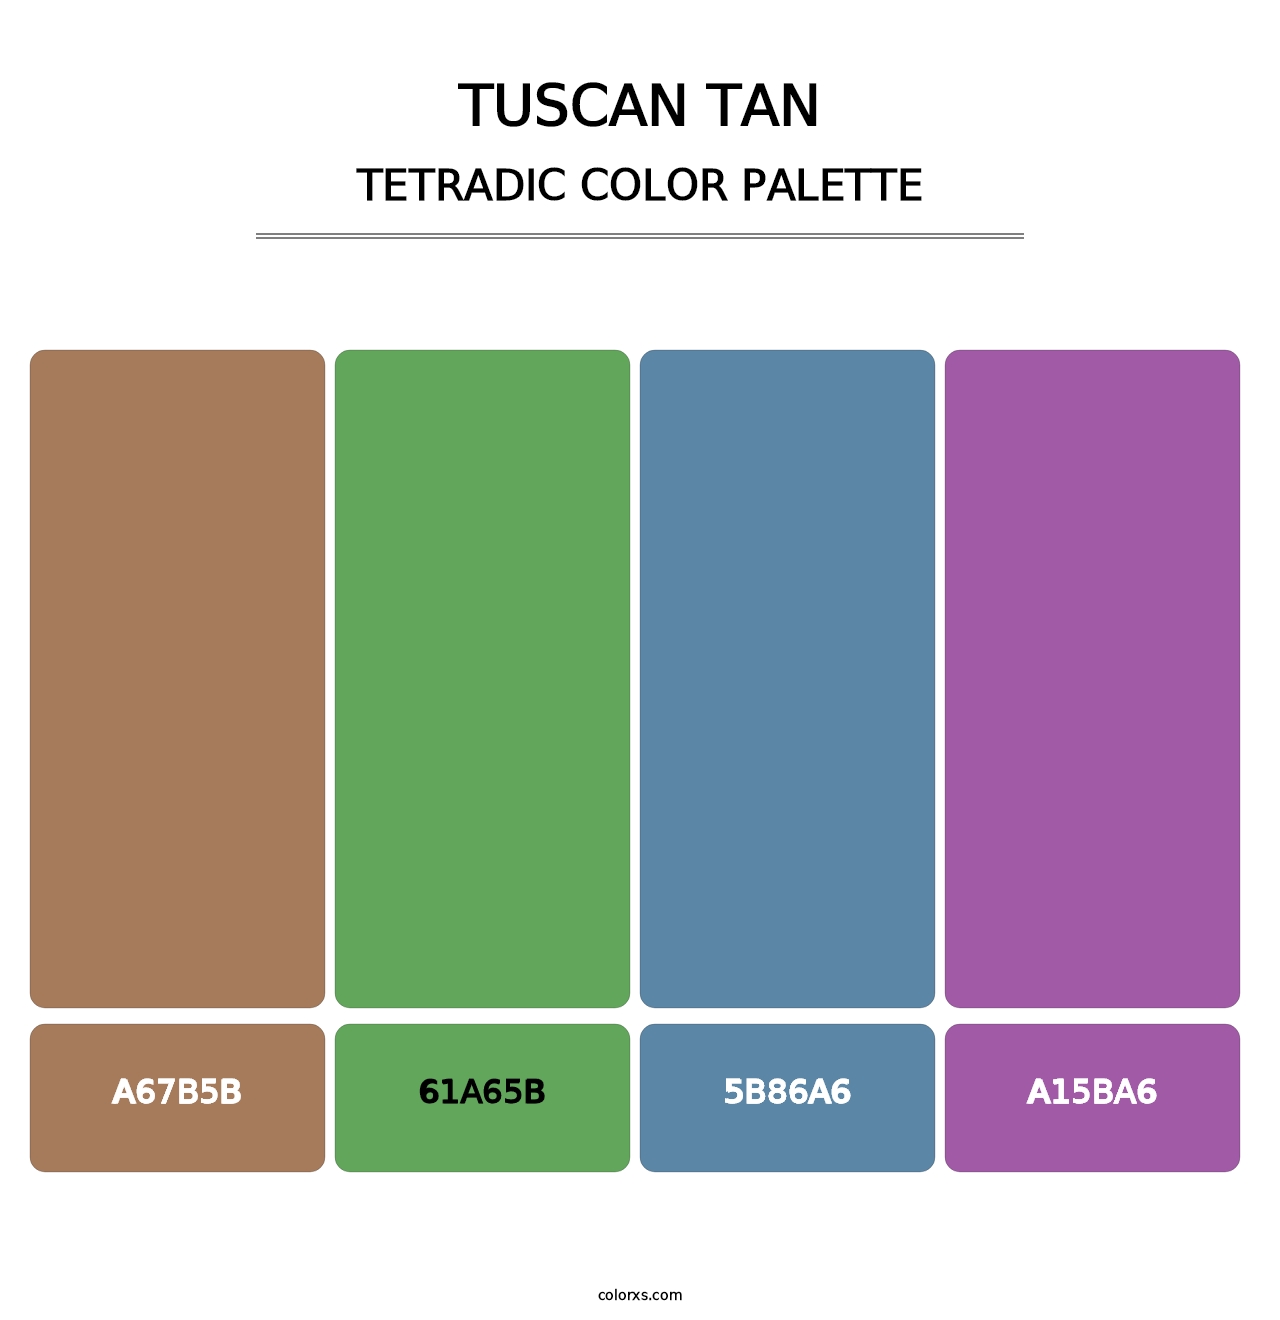 Tuscan Tan - Tetradic Color Palette